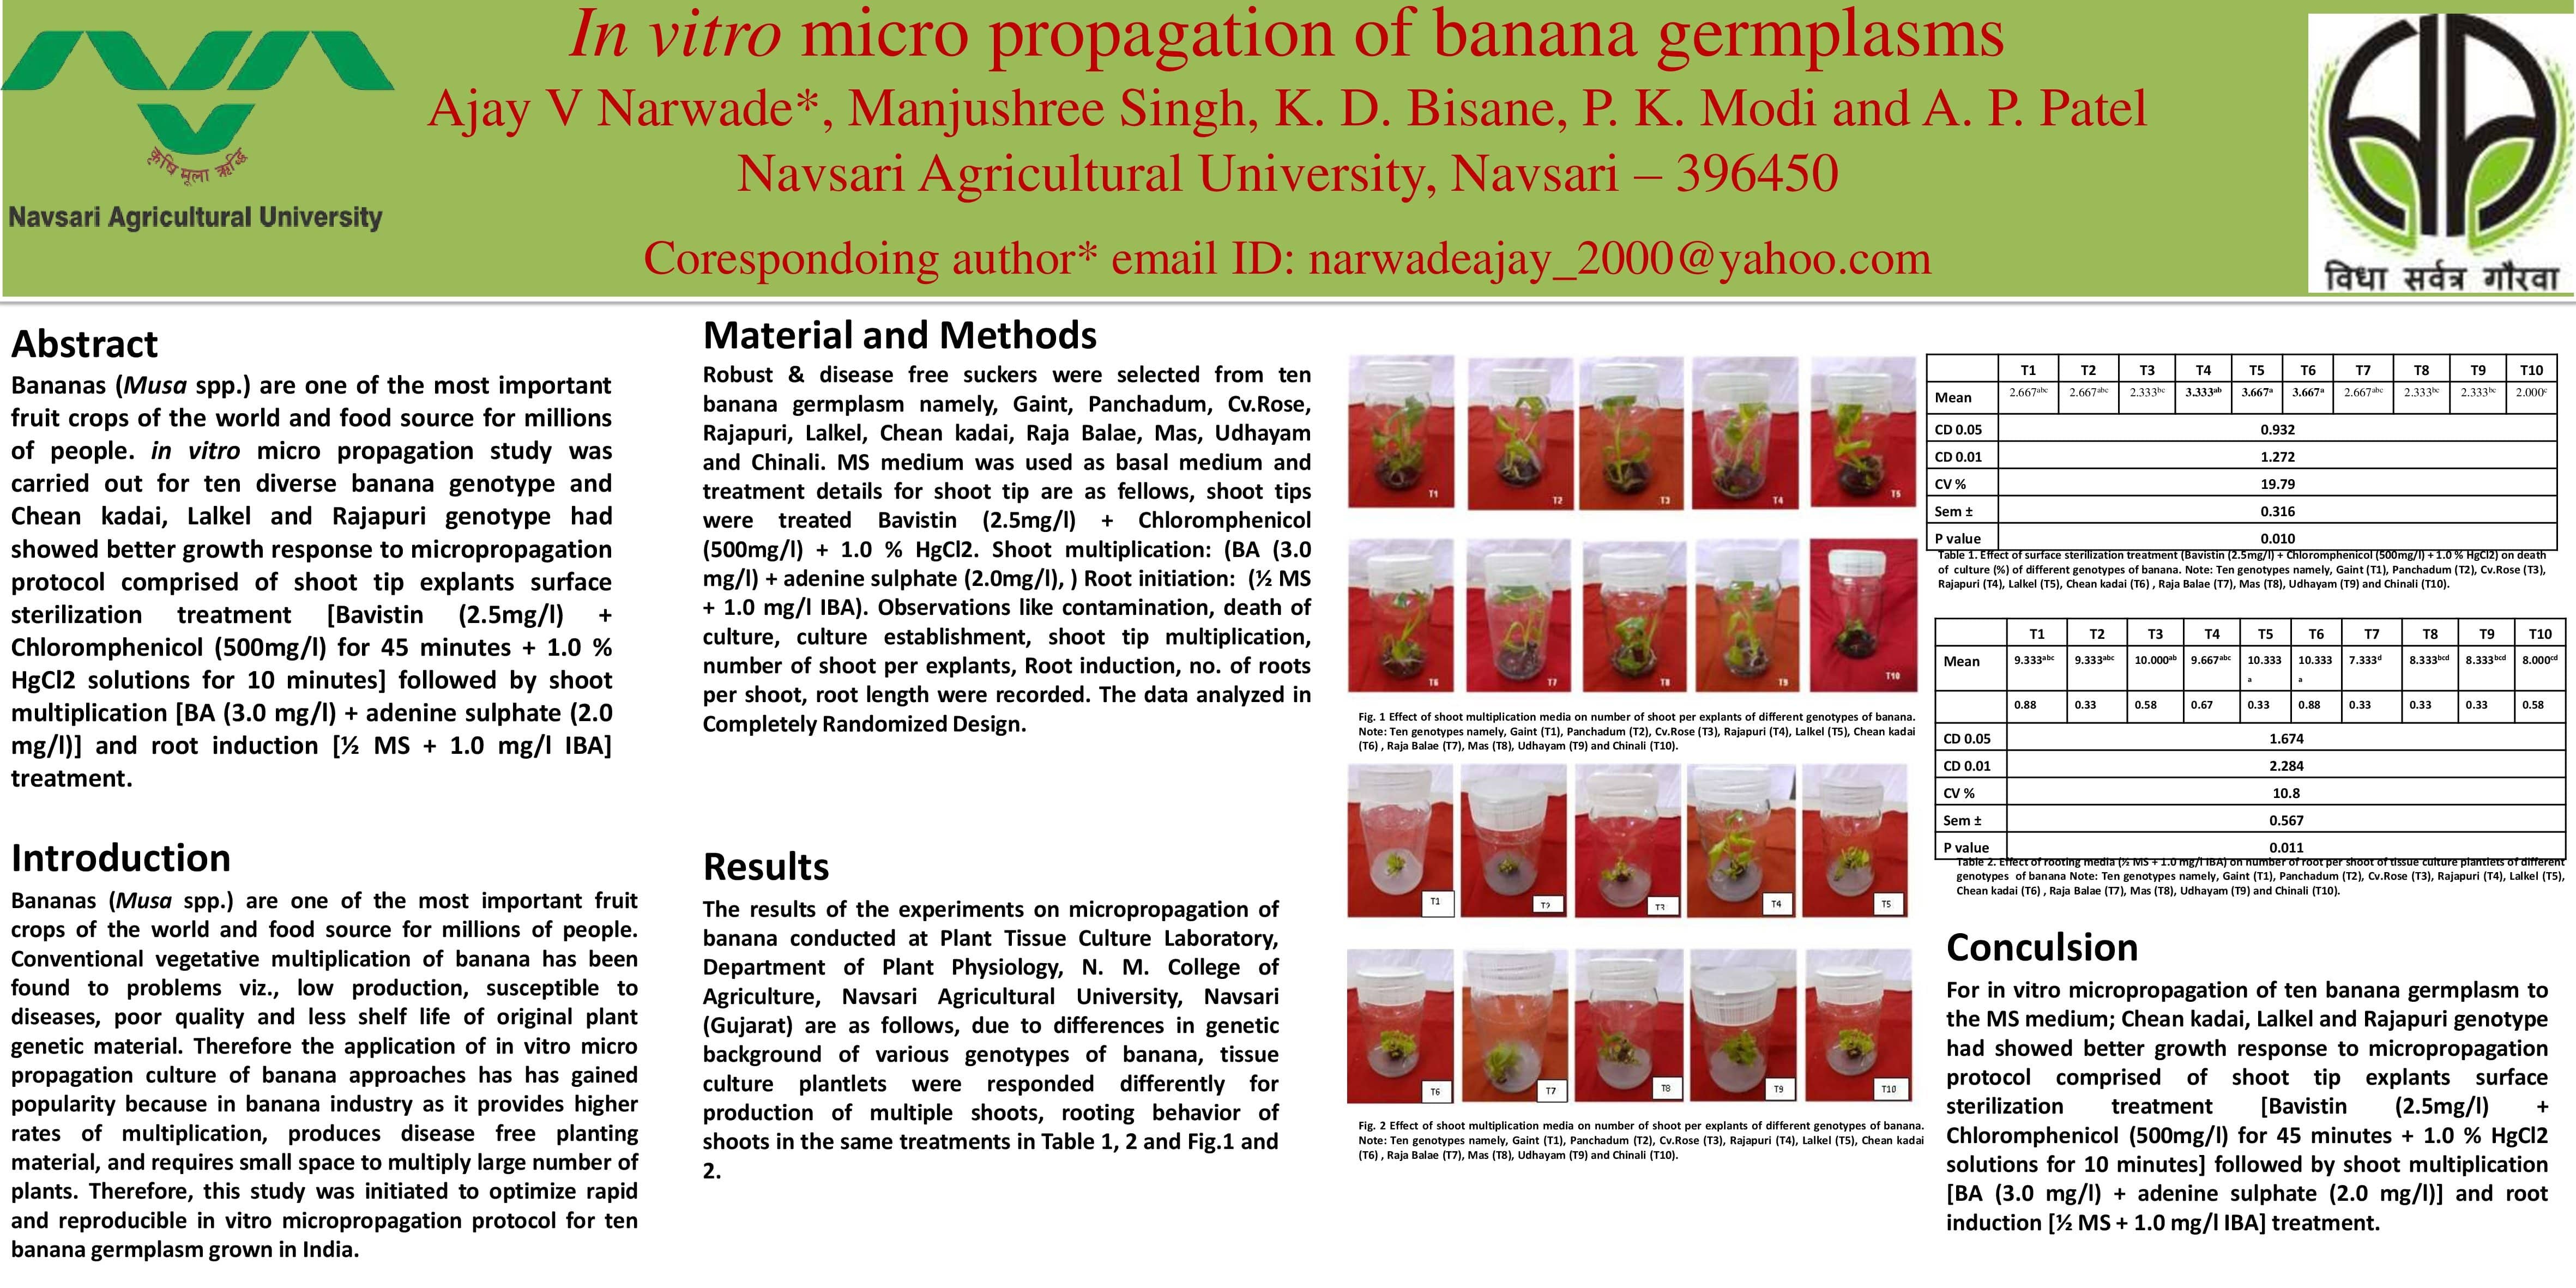 In vitro micro propagation of banana germplasms